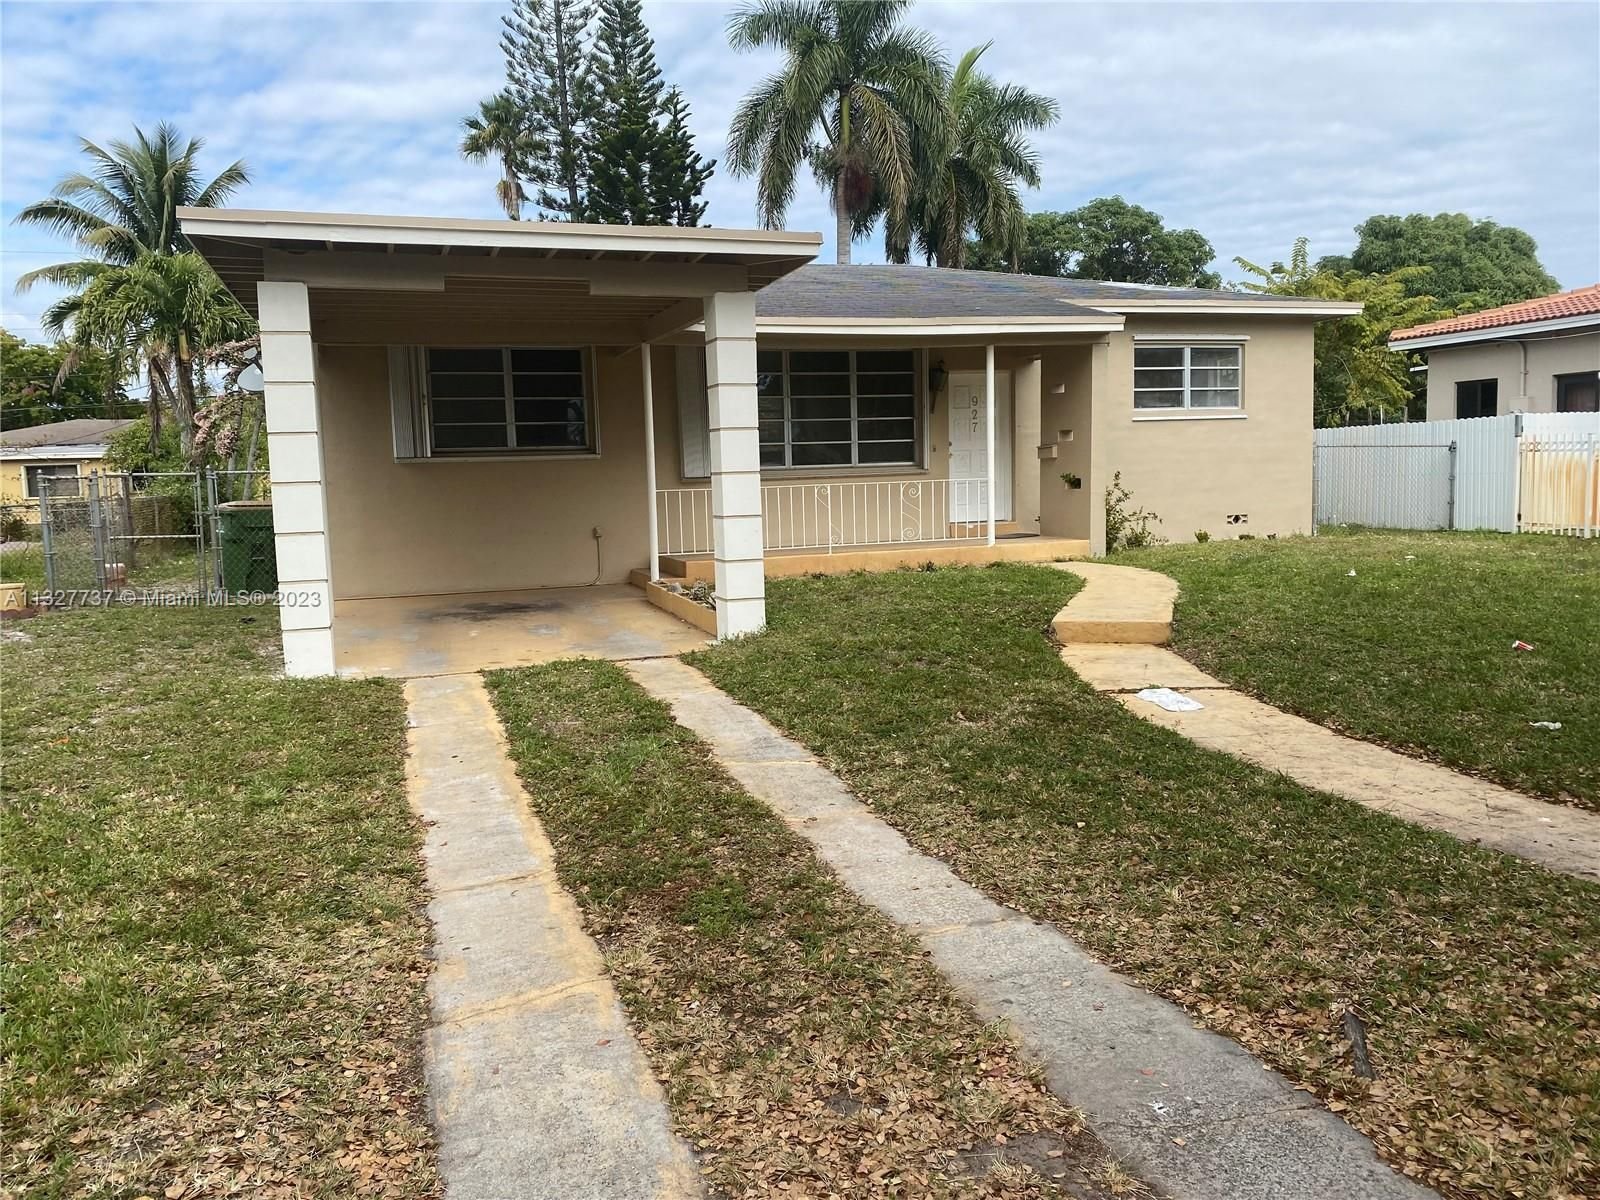 Real estate property located at 927 145th St, Miami-Dade County, North Miami, FL